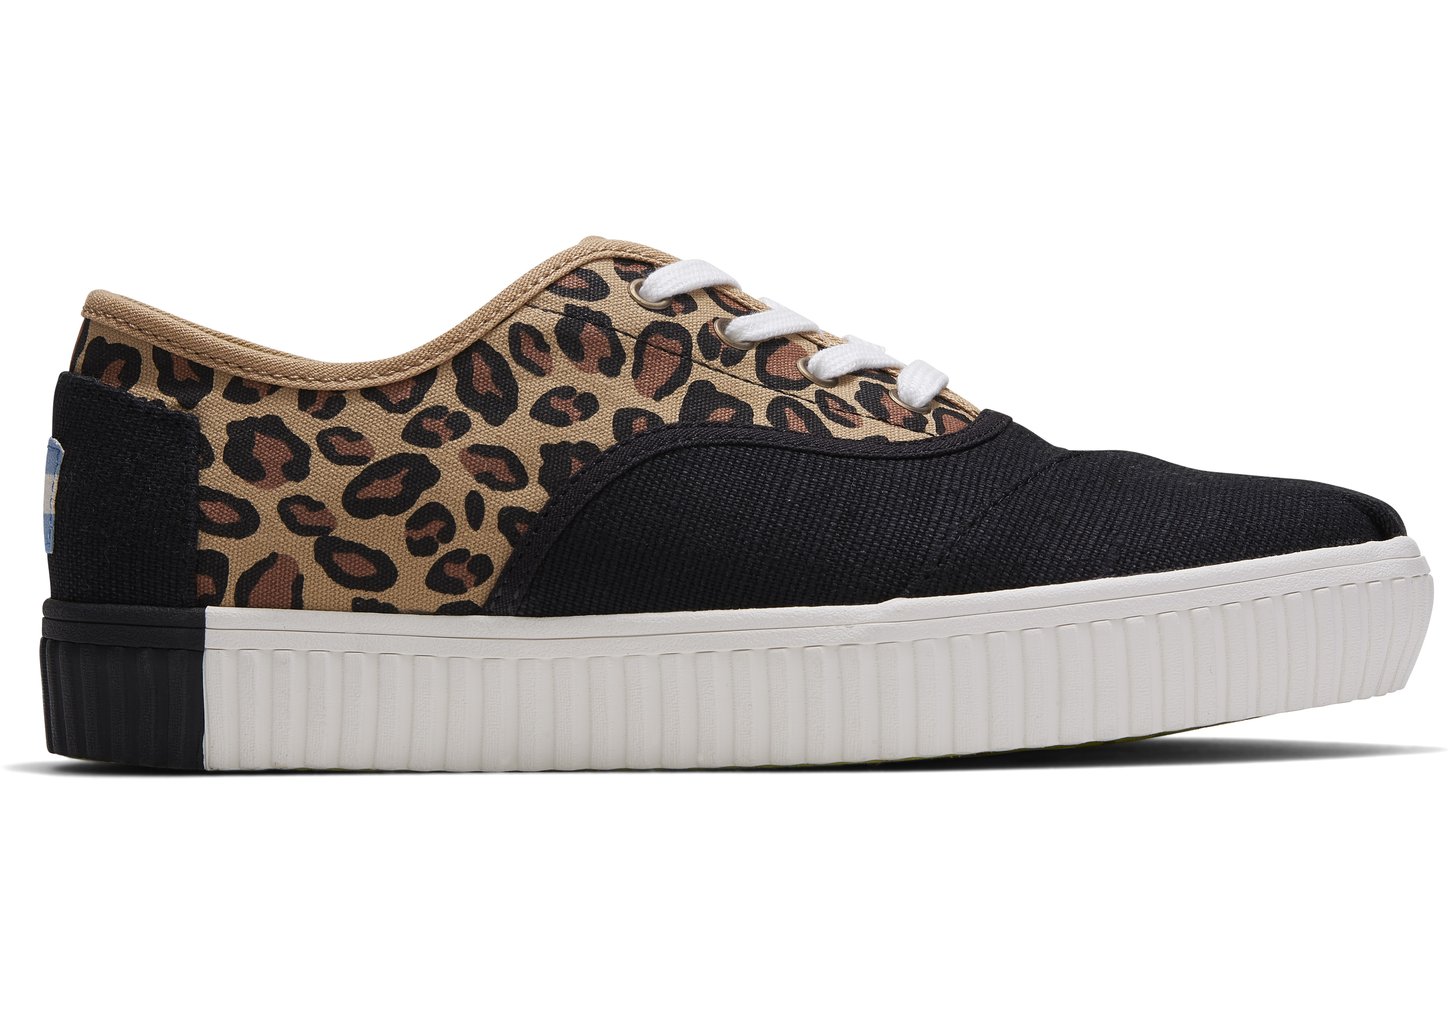 toms leopard sneakers